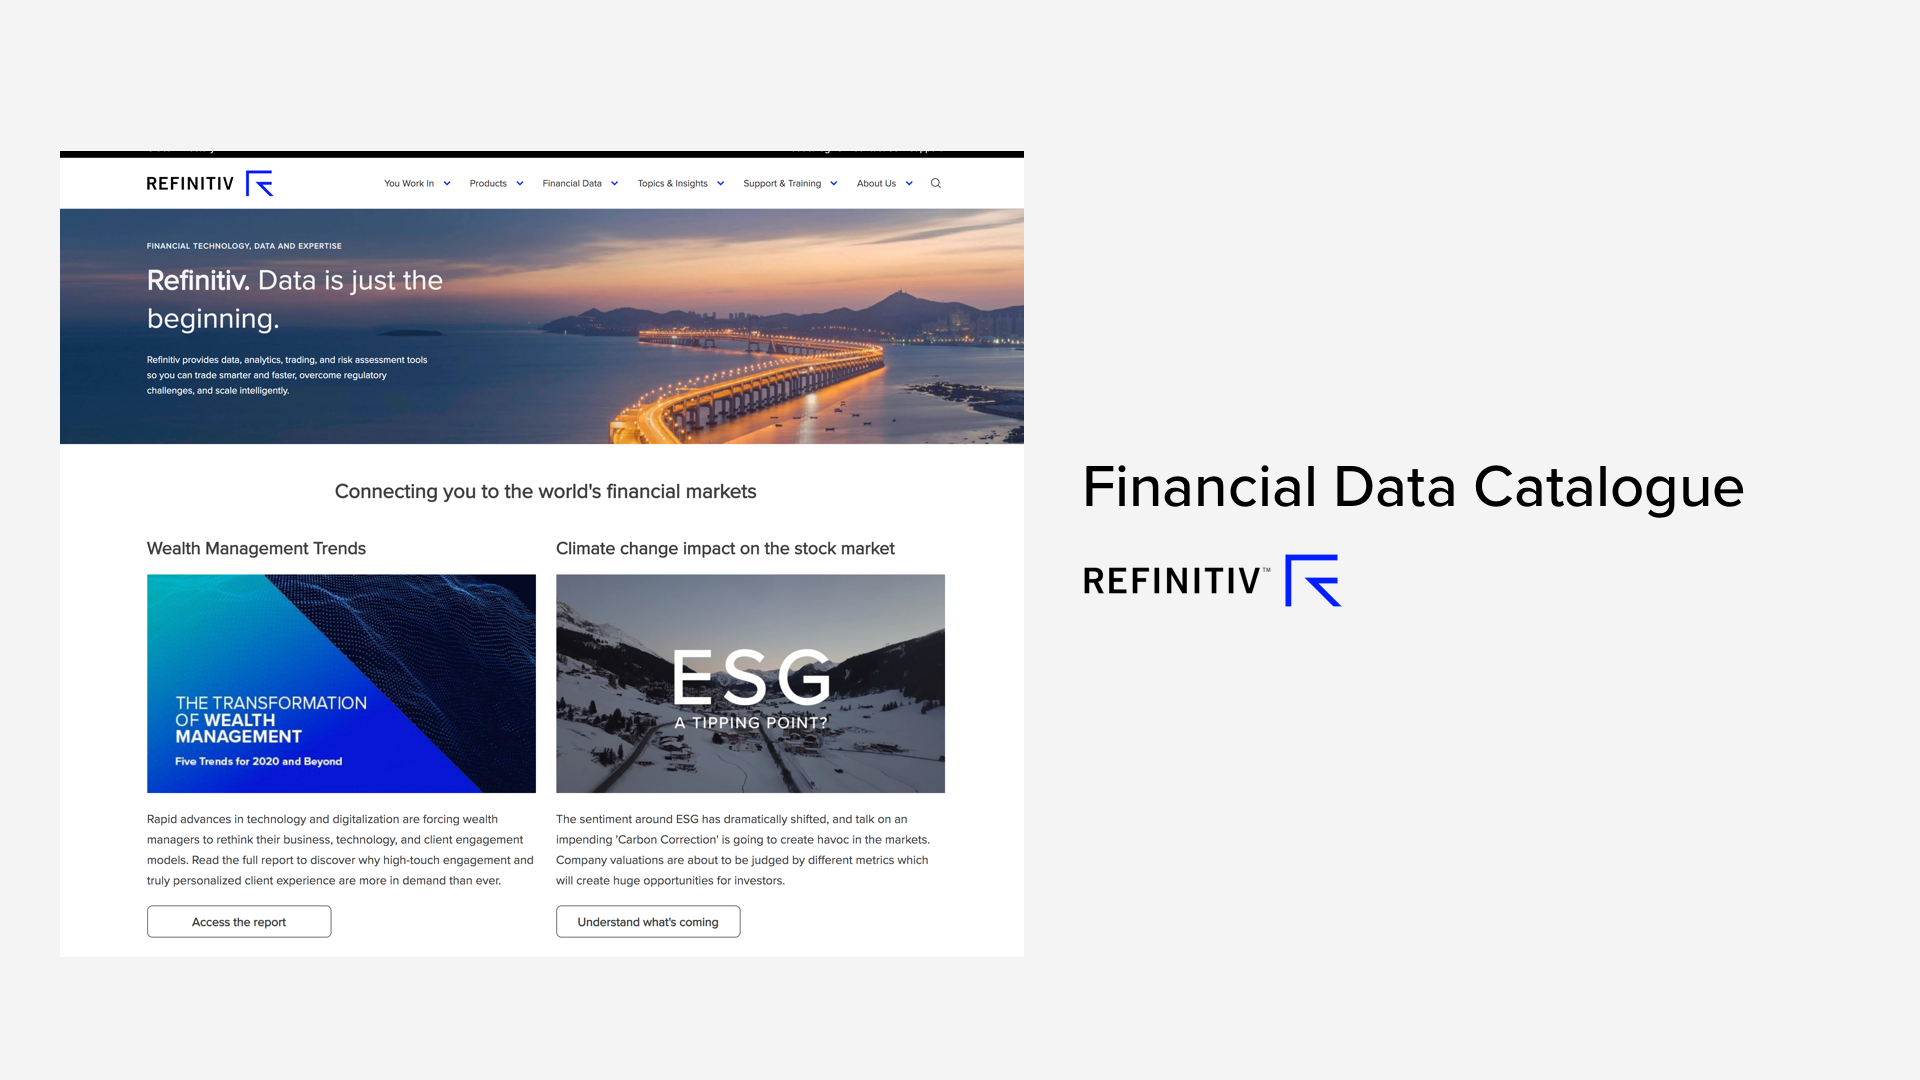 Financial Data Catalogue